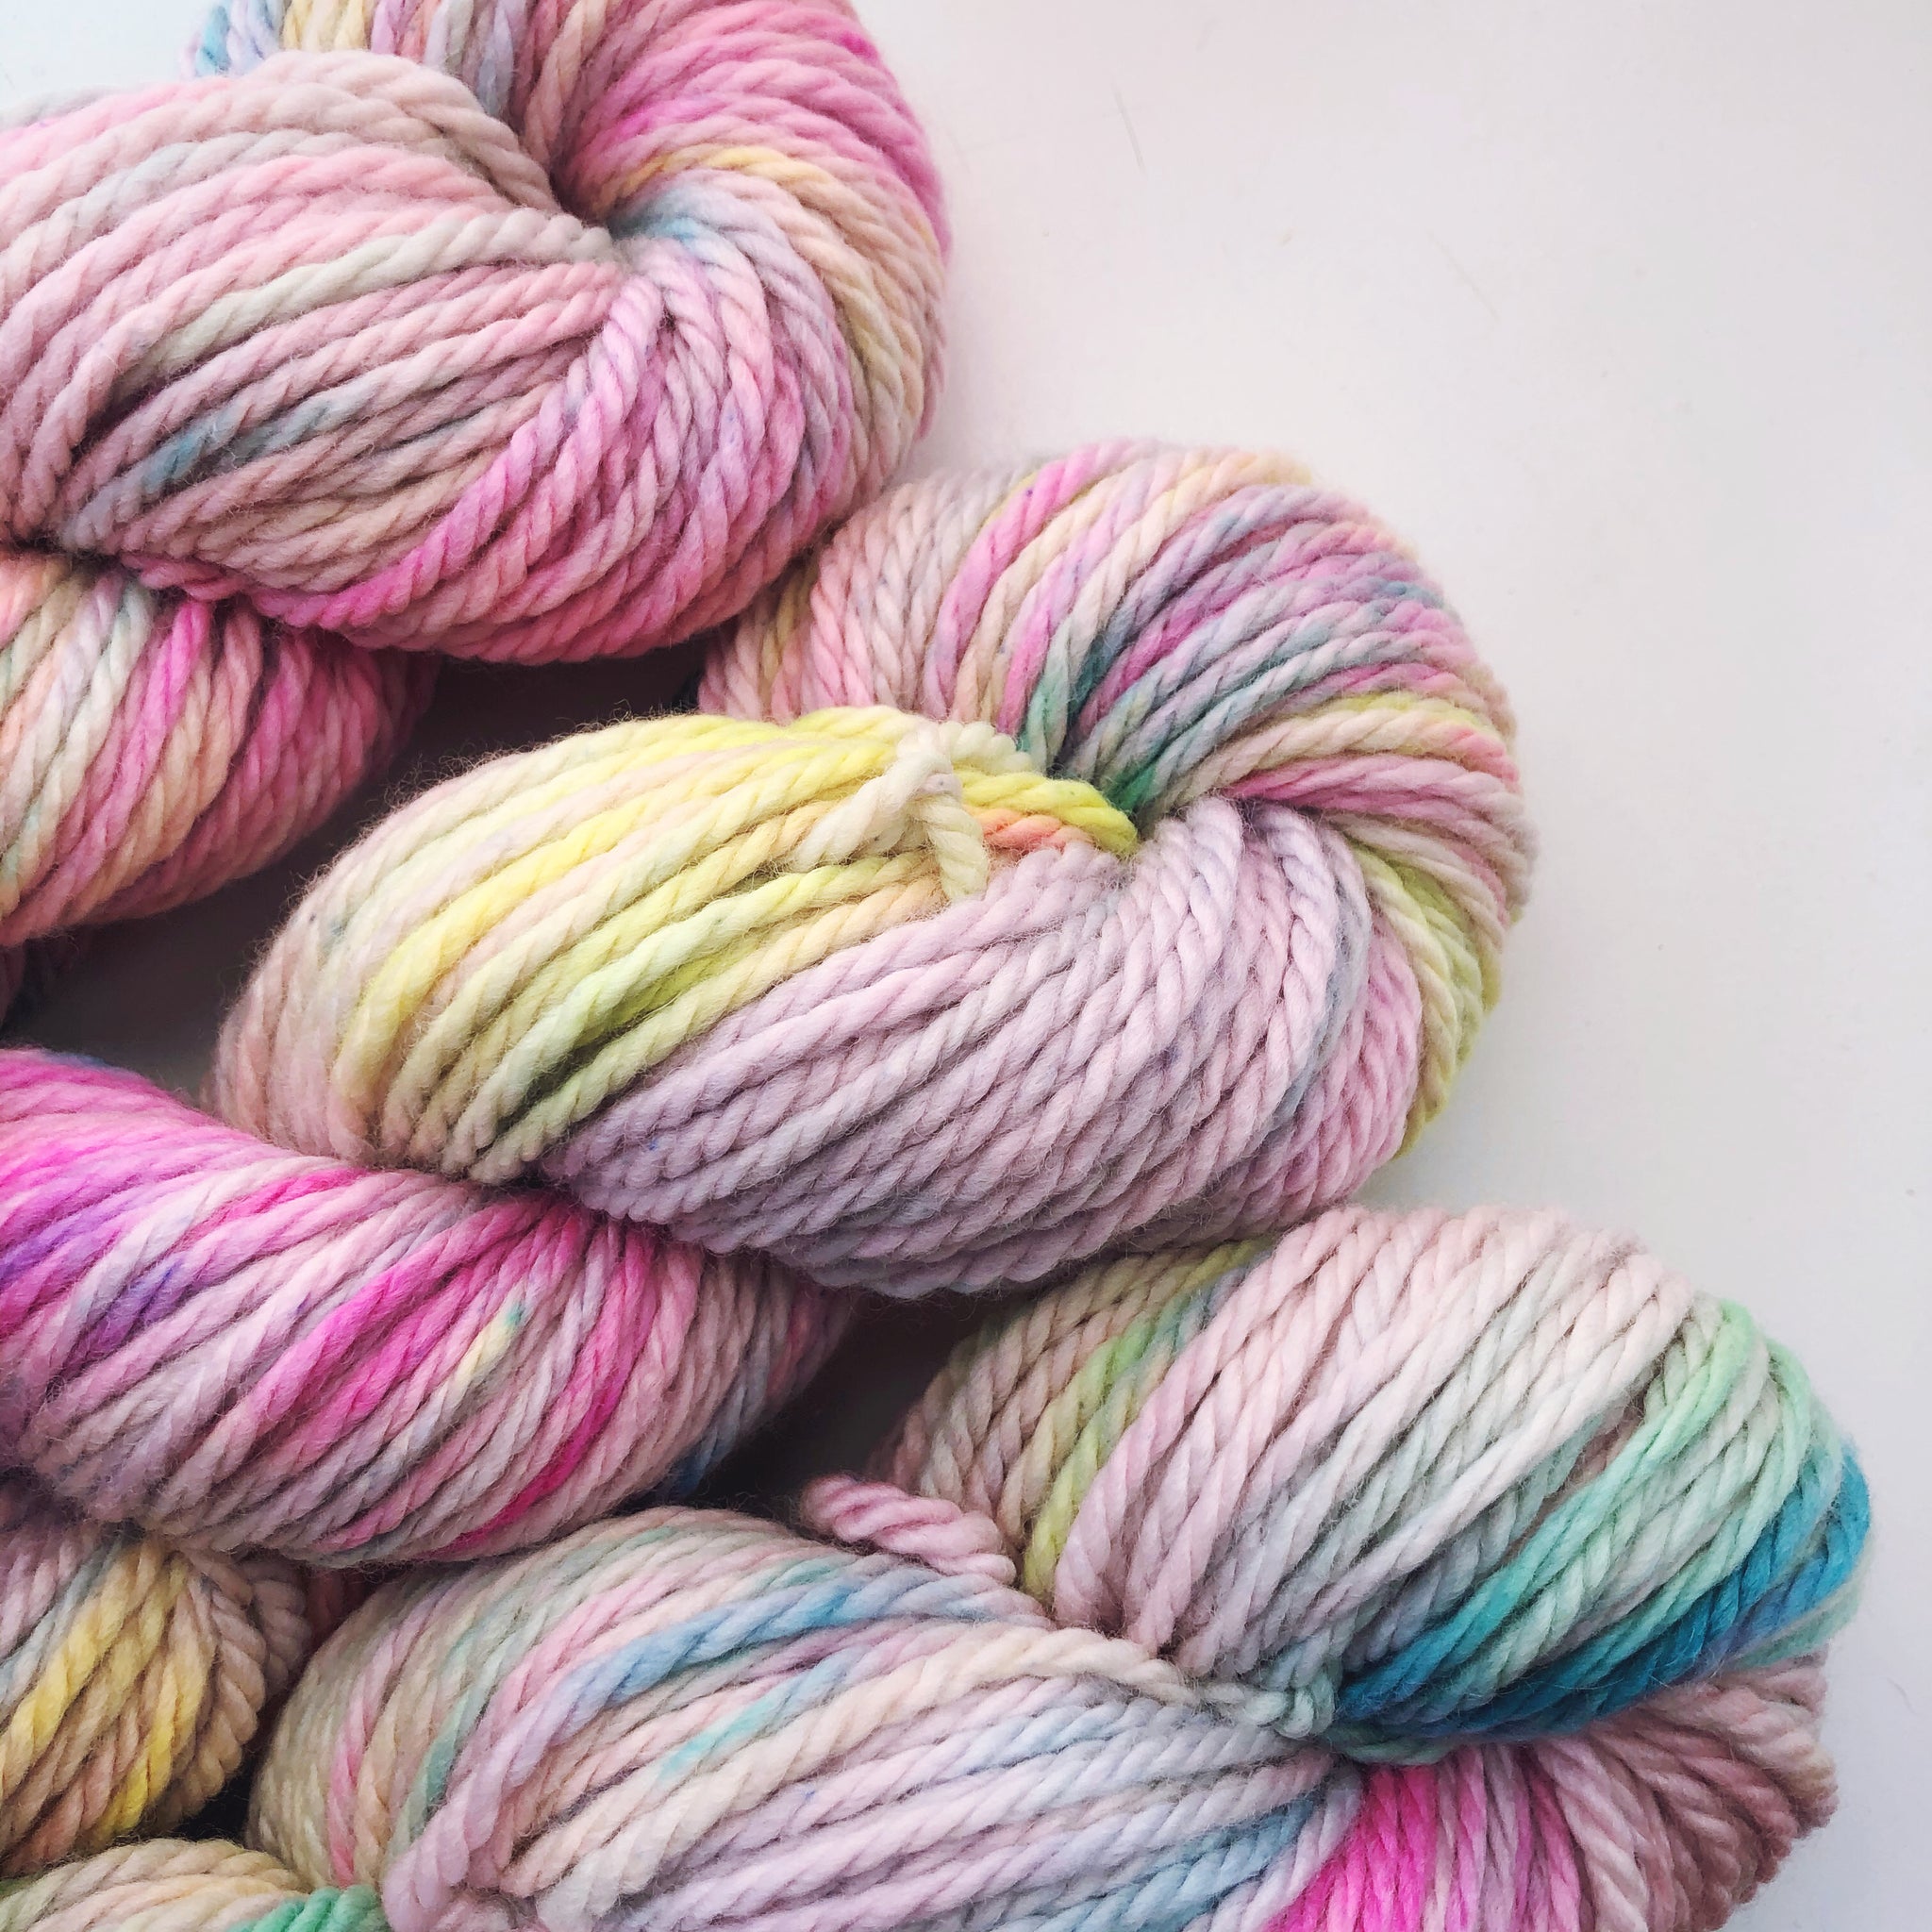 Bulky Hand Dyed Yarn 100% Superwash Merino Wool Ink Tonal -  Portugal